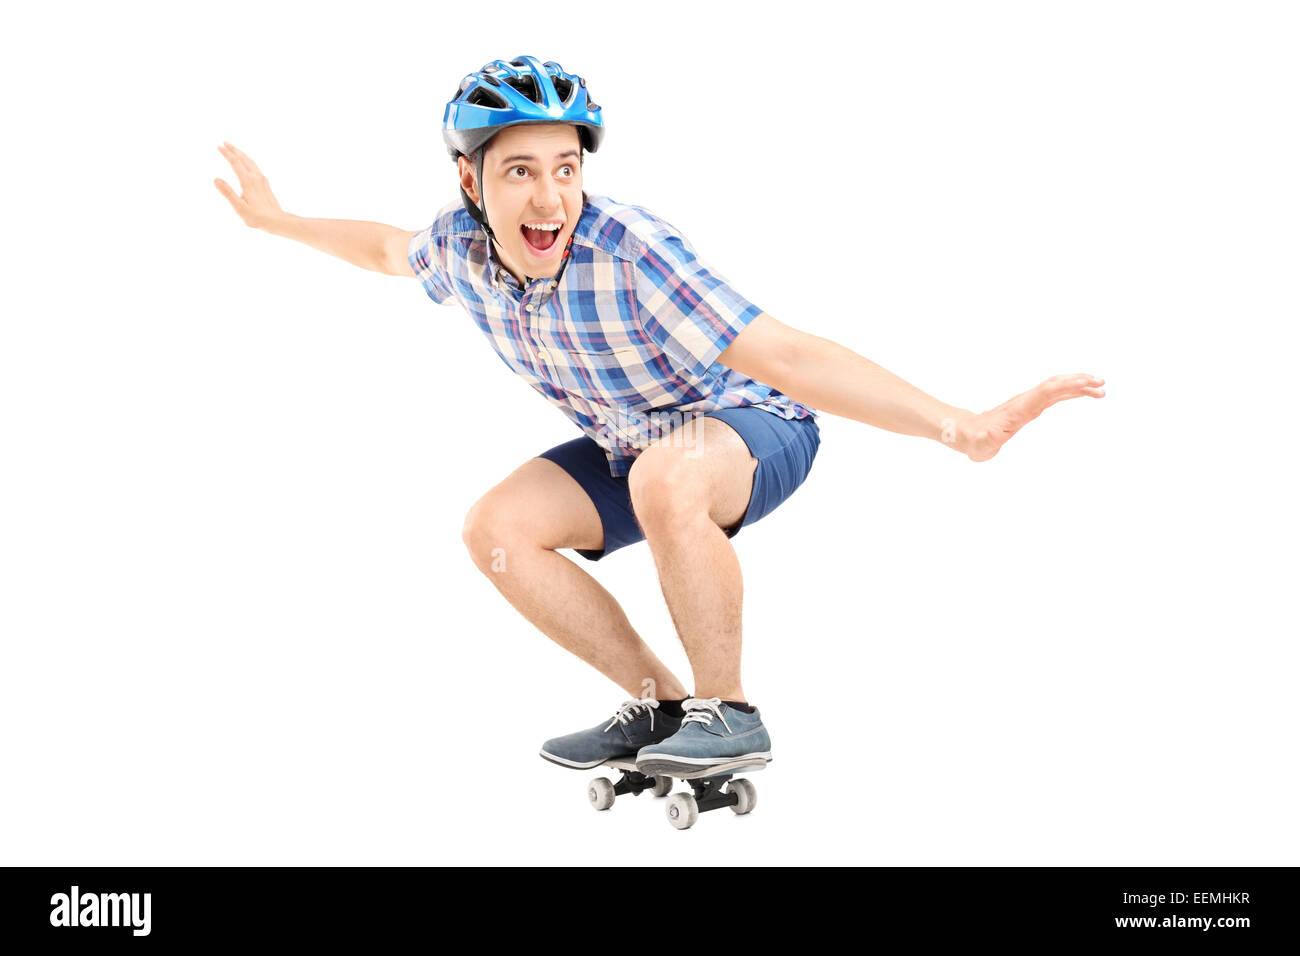 Joyful guy riding a small skateboard isolated on white background Stock Photo